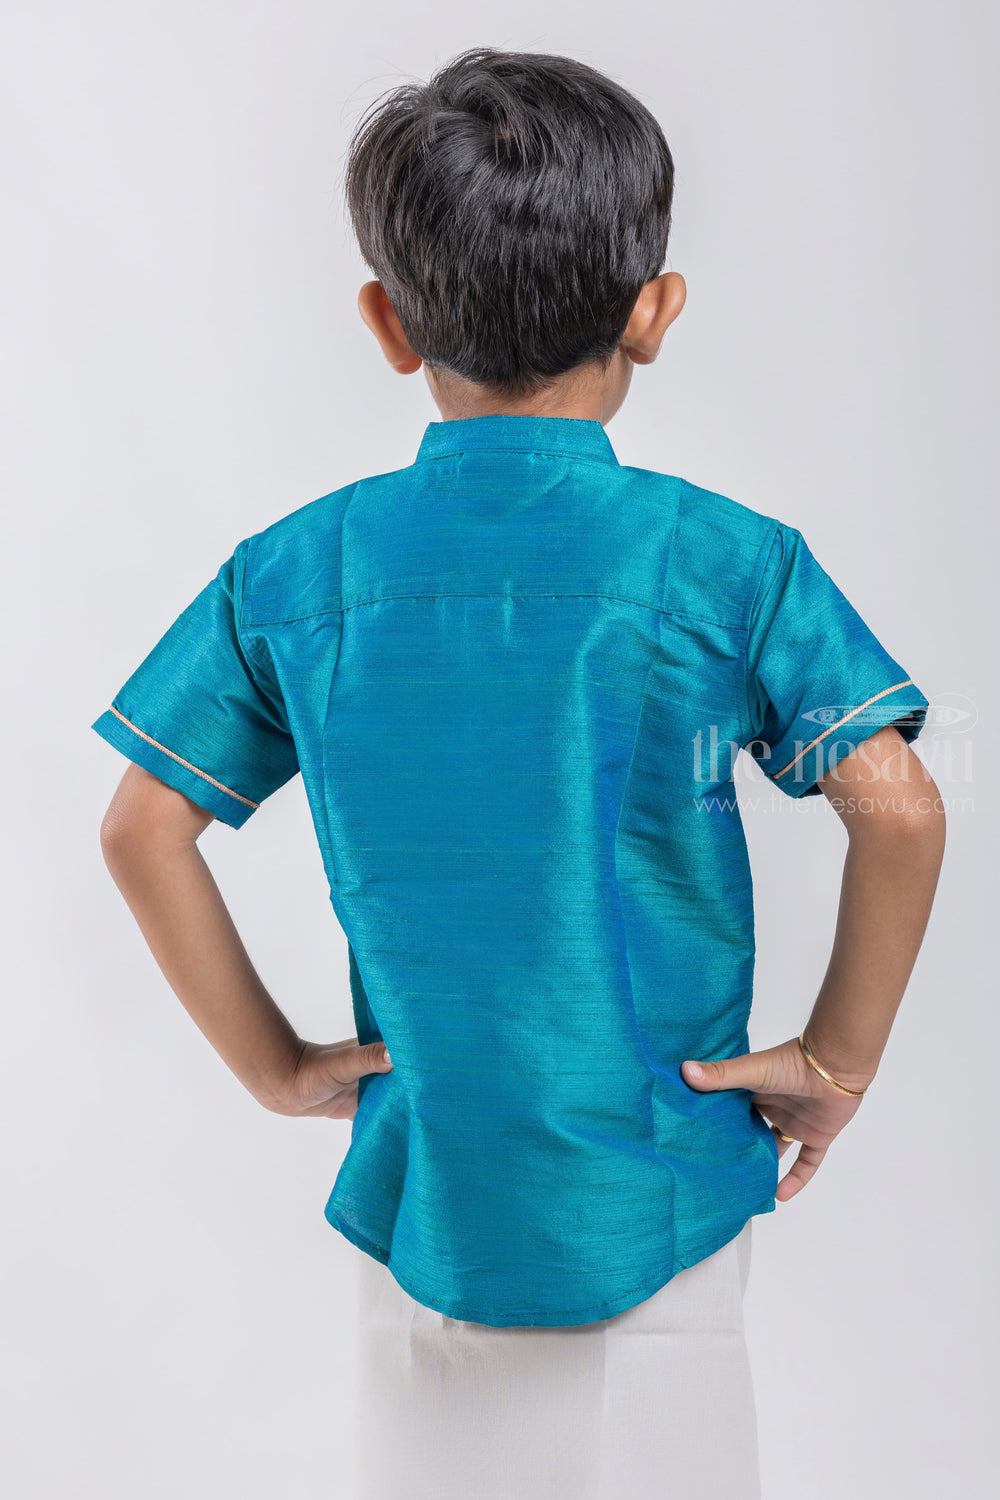 The Nesavu Boys Silk Shirt Rama Turquoise Tranquility Boys Pattu Zari Shirt psr silks Nesavu